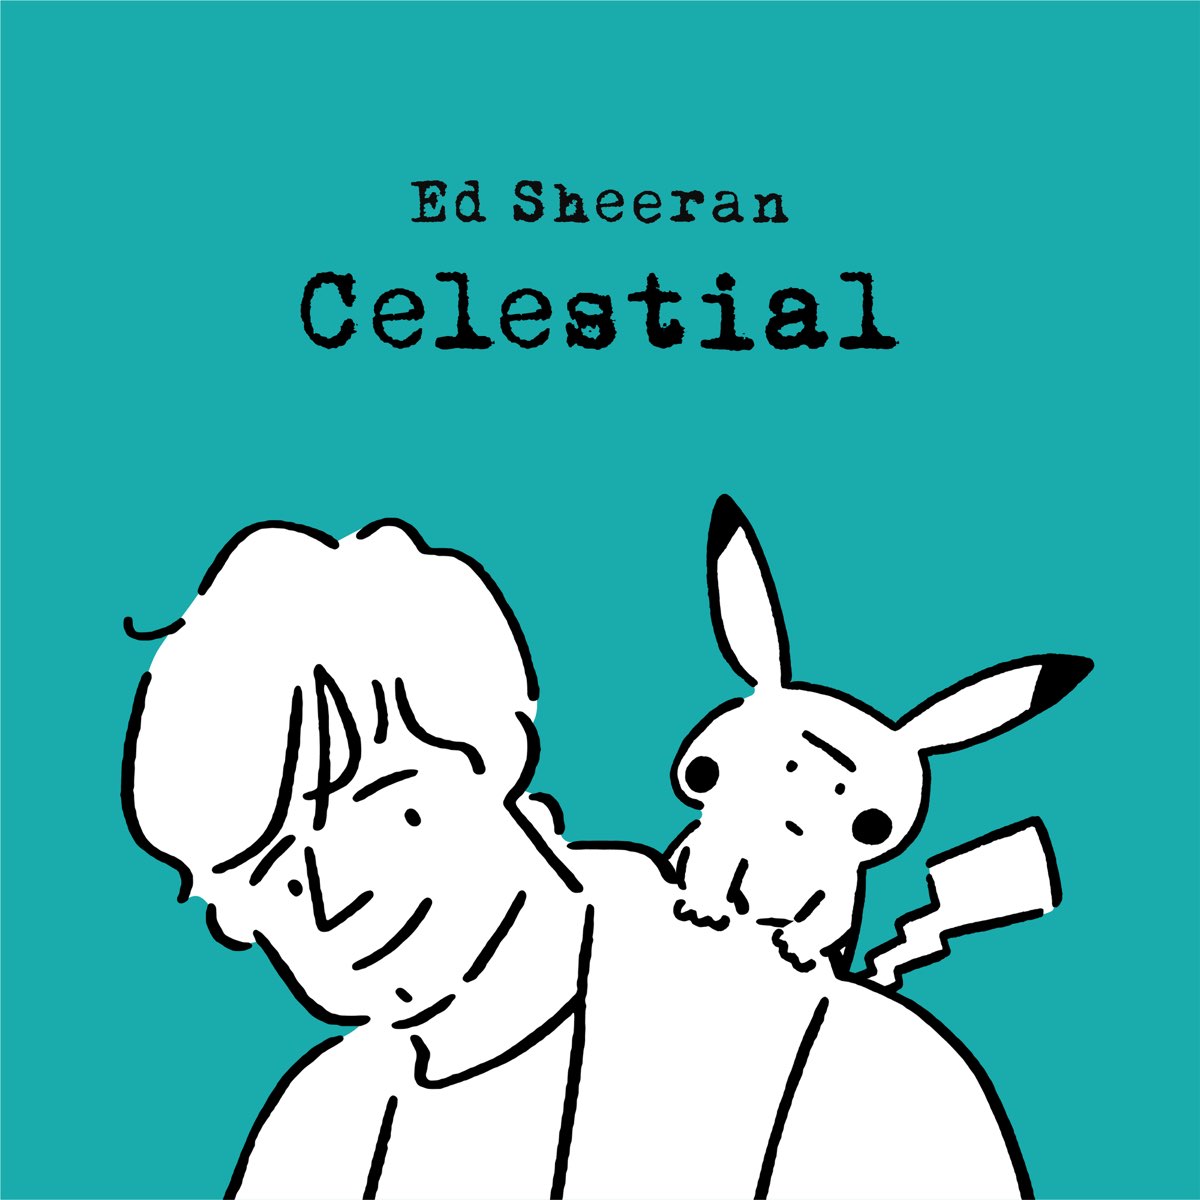 Celestial - Single - Album by Ed Sheeran - Apple Music